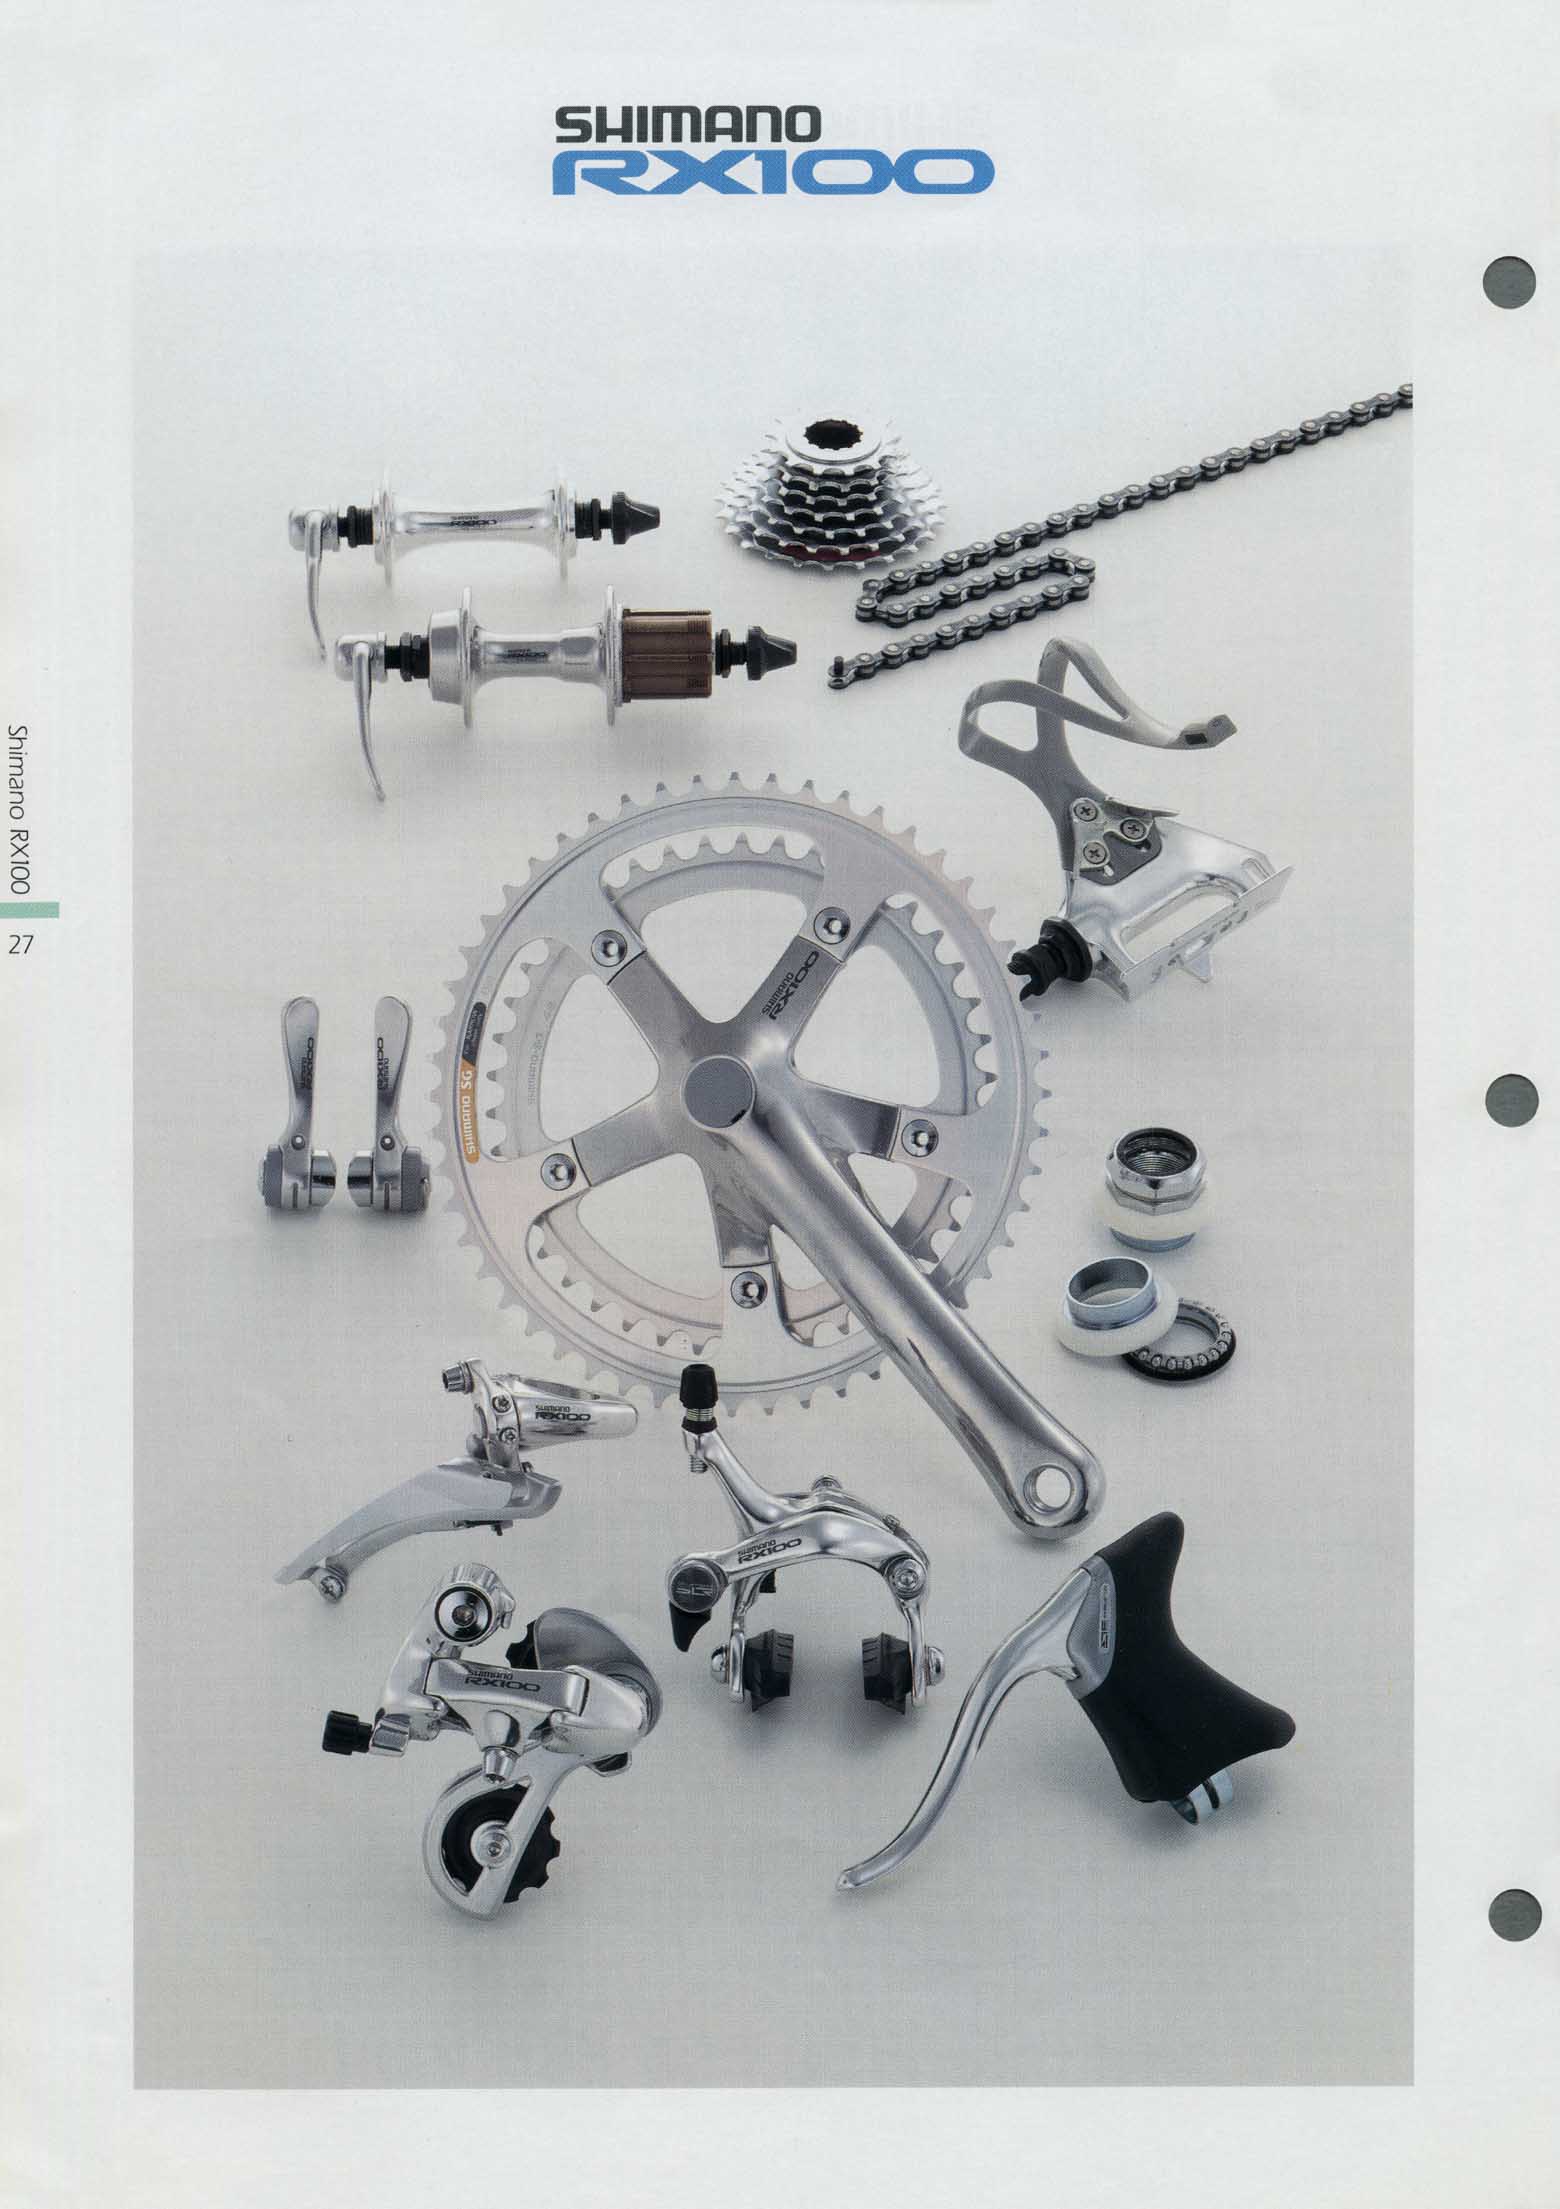 Shimano - Dealers' 1990 Product Manual page 27 main image